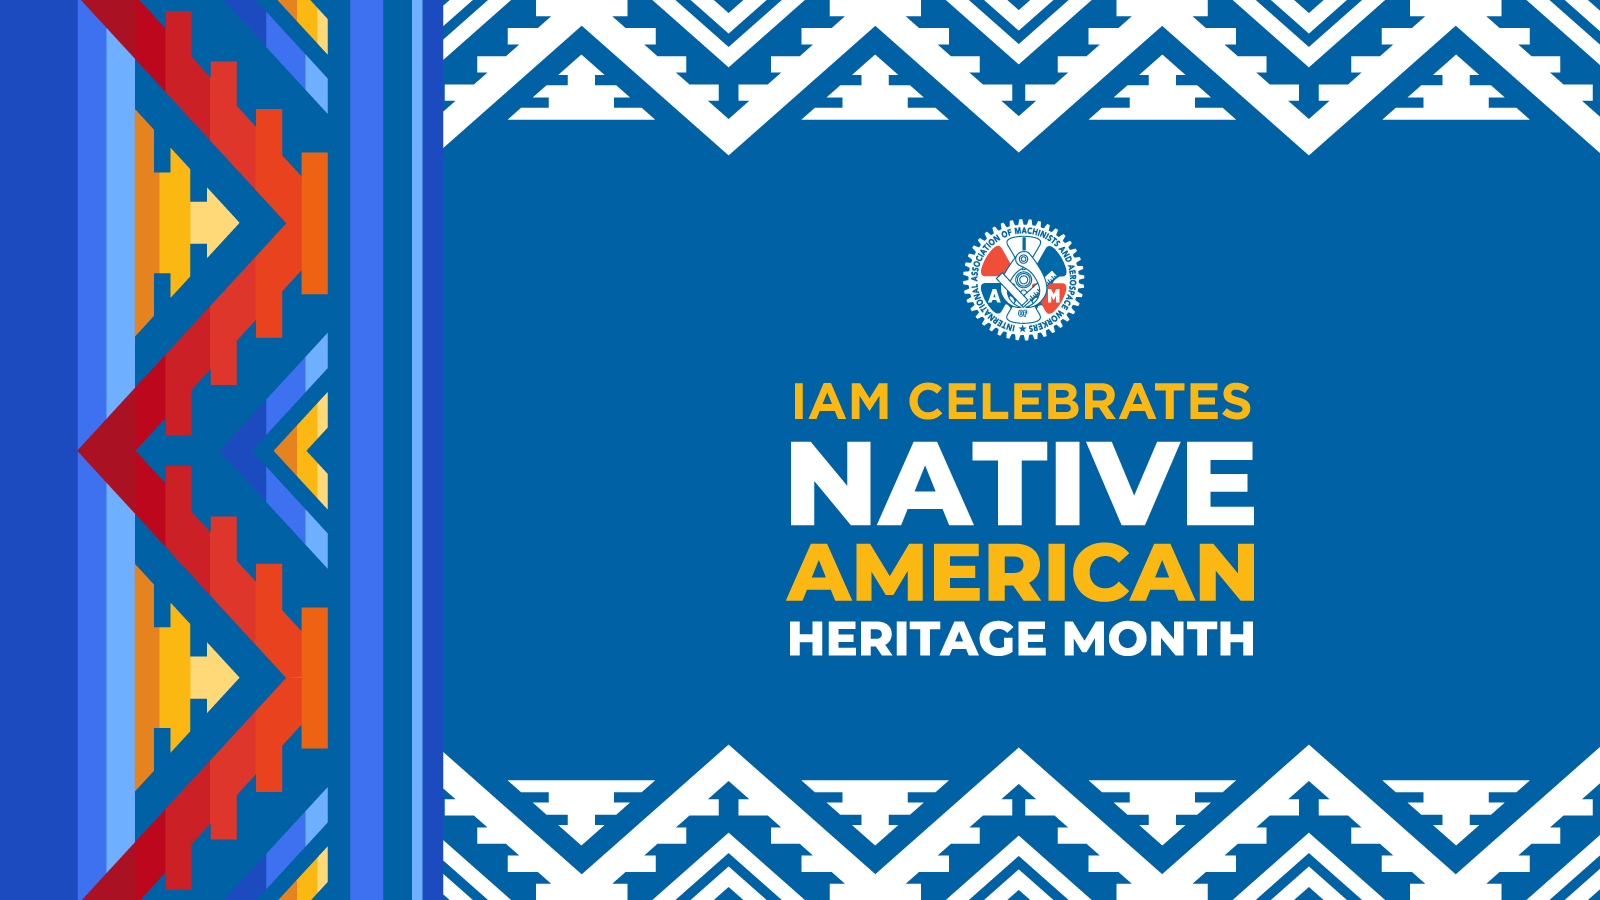 IAM Celebrates Native American Heritage Month